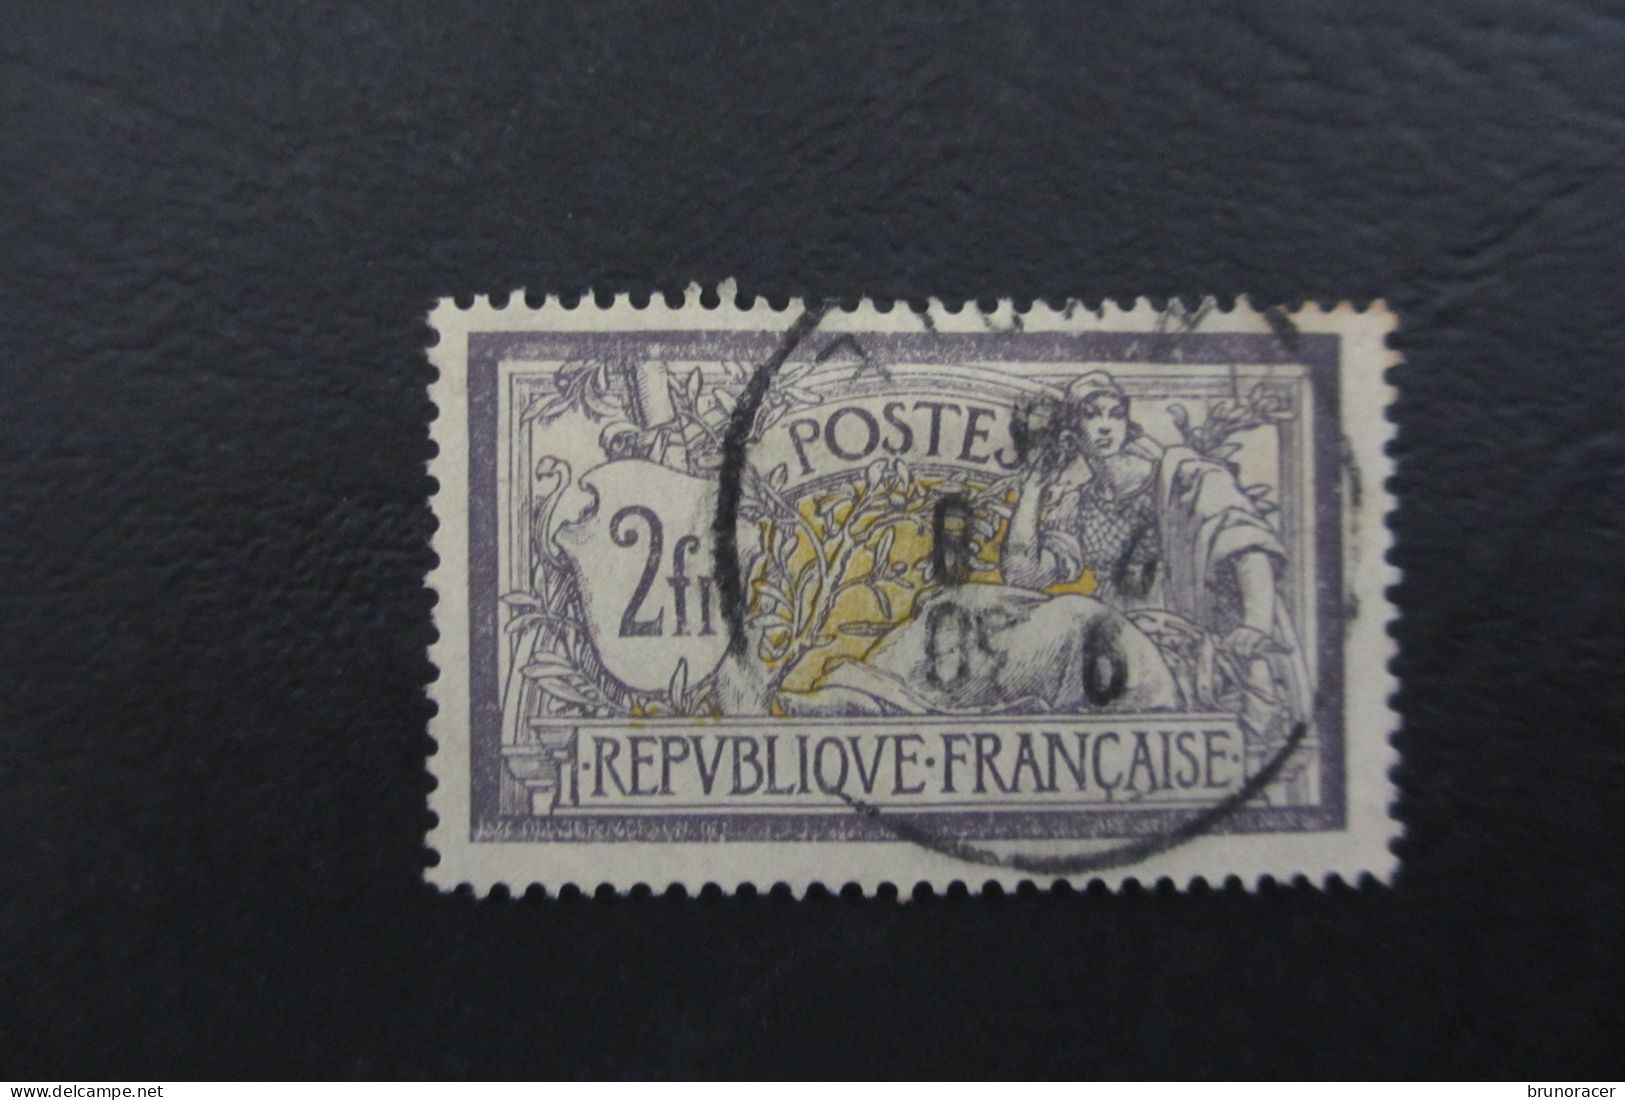 FRANCE MERSON N°122 OBLITERES TB COTE 90 EUROS VOIR SCANS - Used Stamps